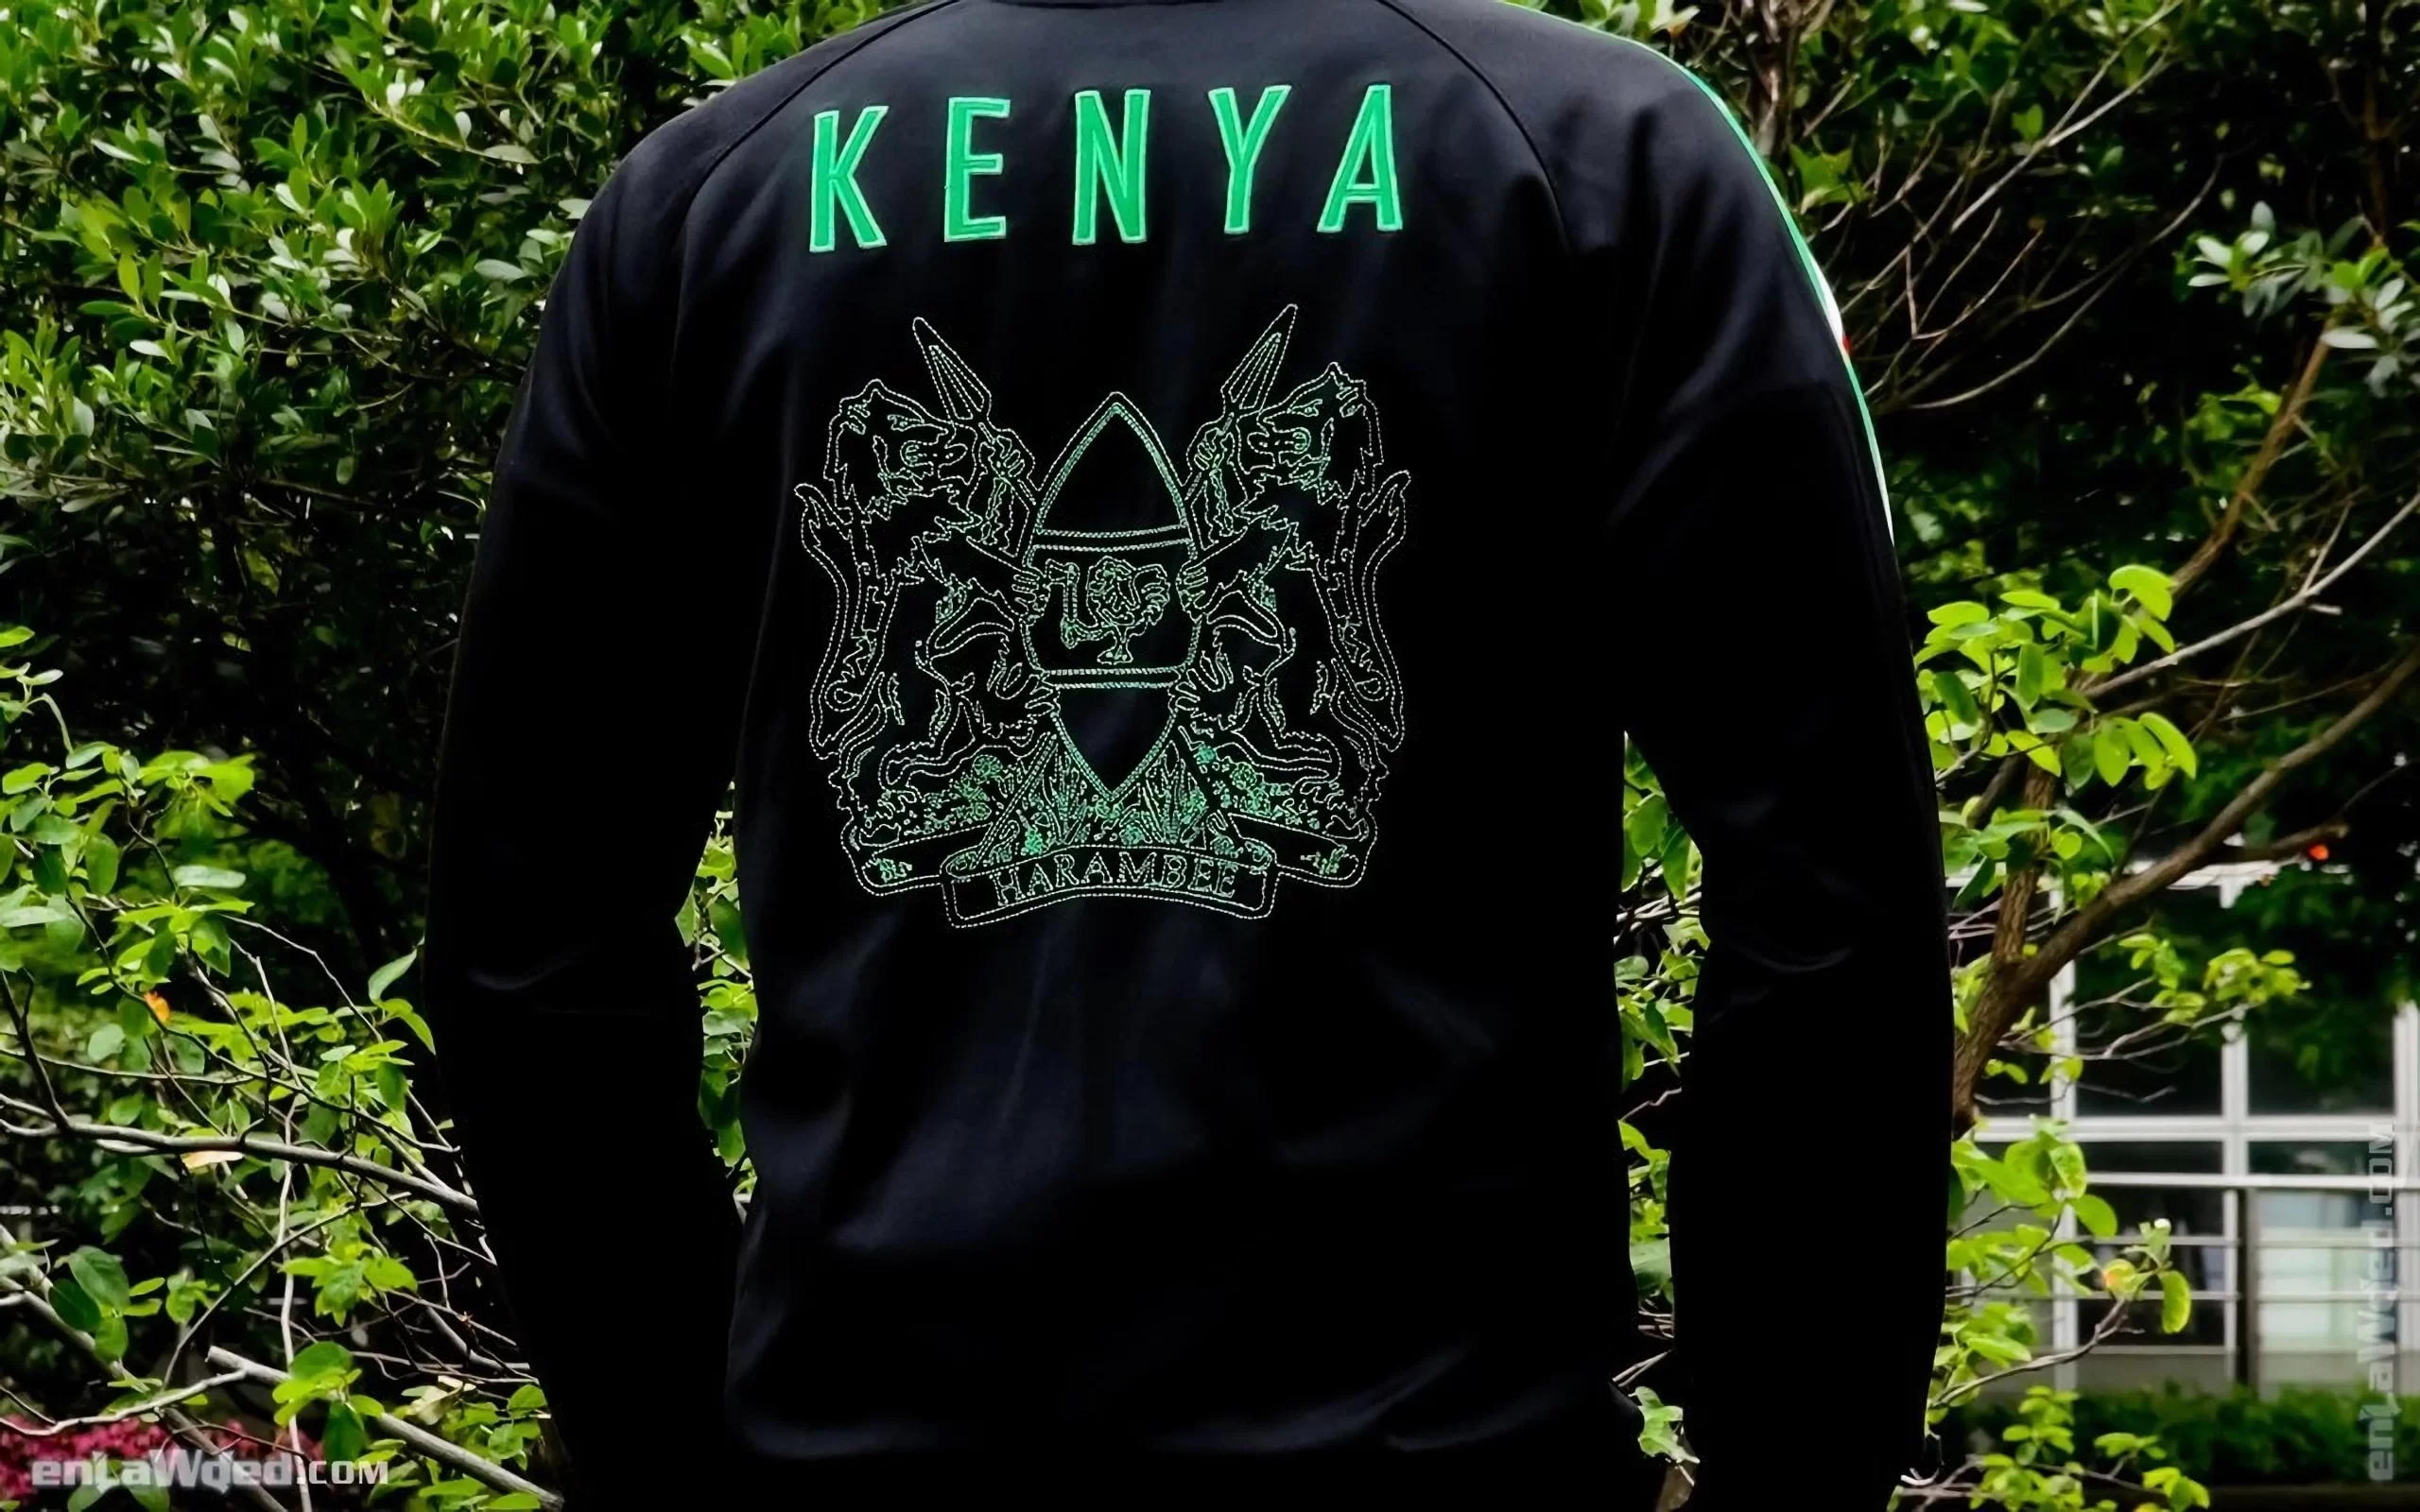 Men’s 2007 Kenya Harambee TT by Adidas Originals: Breakthrough (EnLawded.com file #lmcgjg0j5psv87oriye)